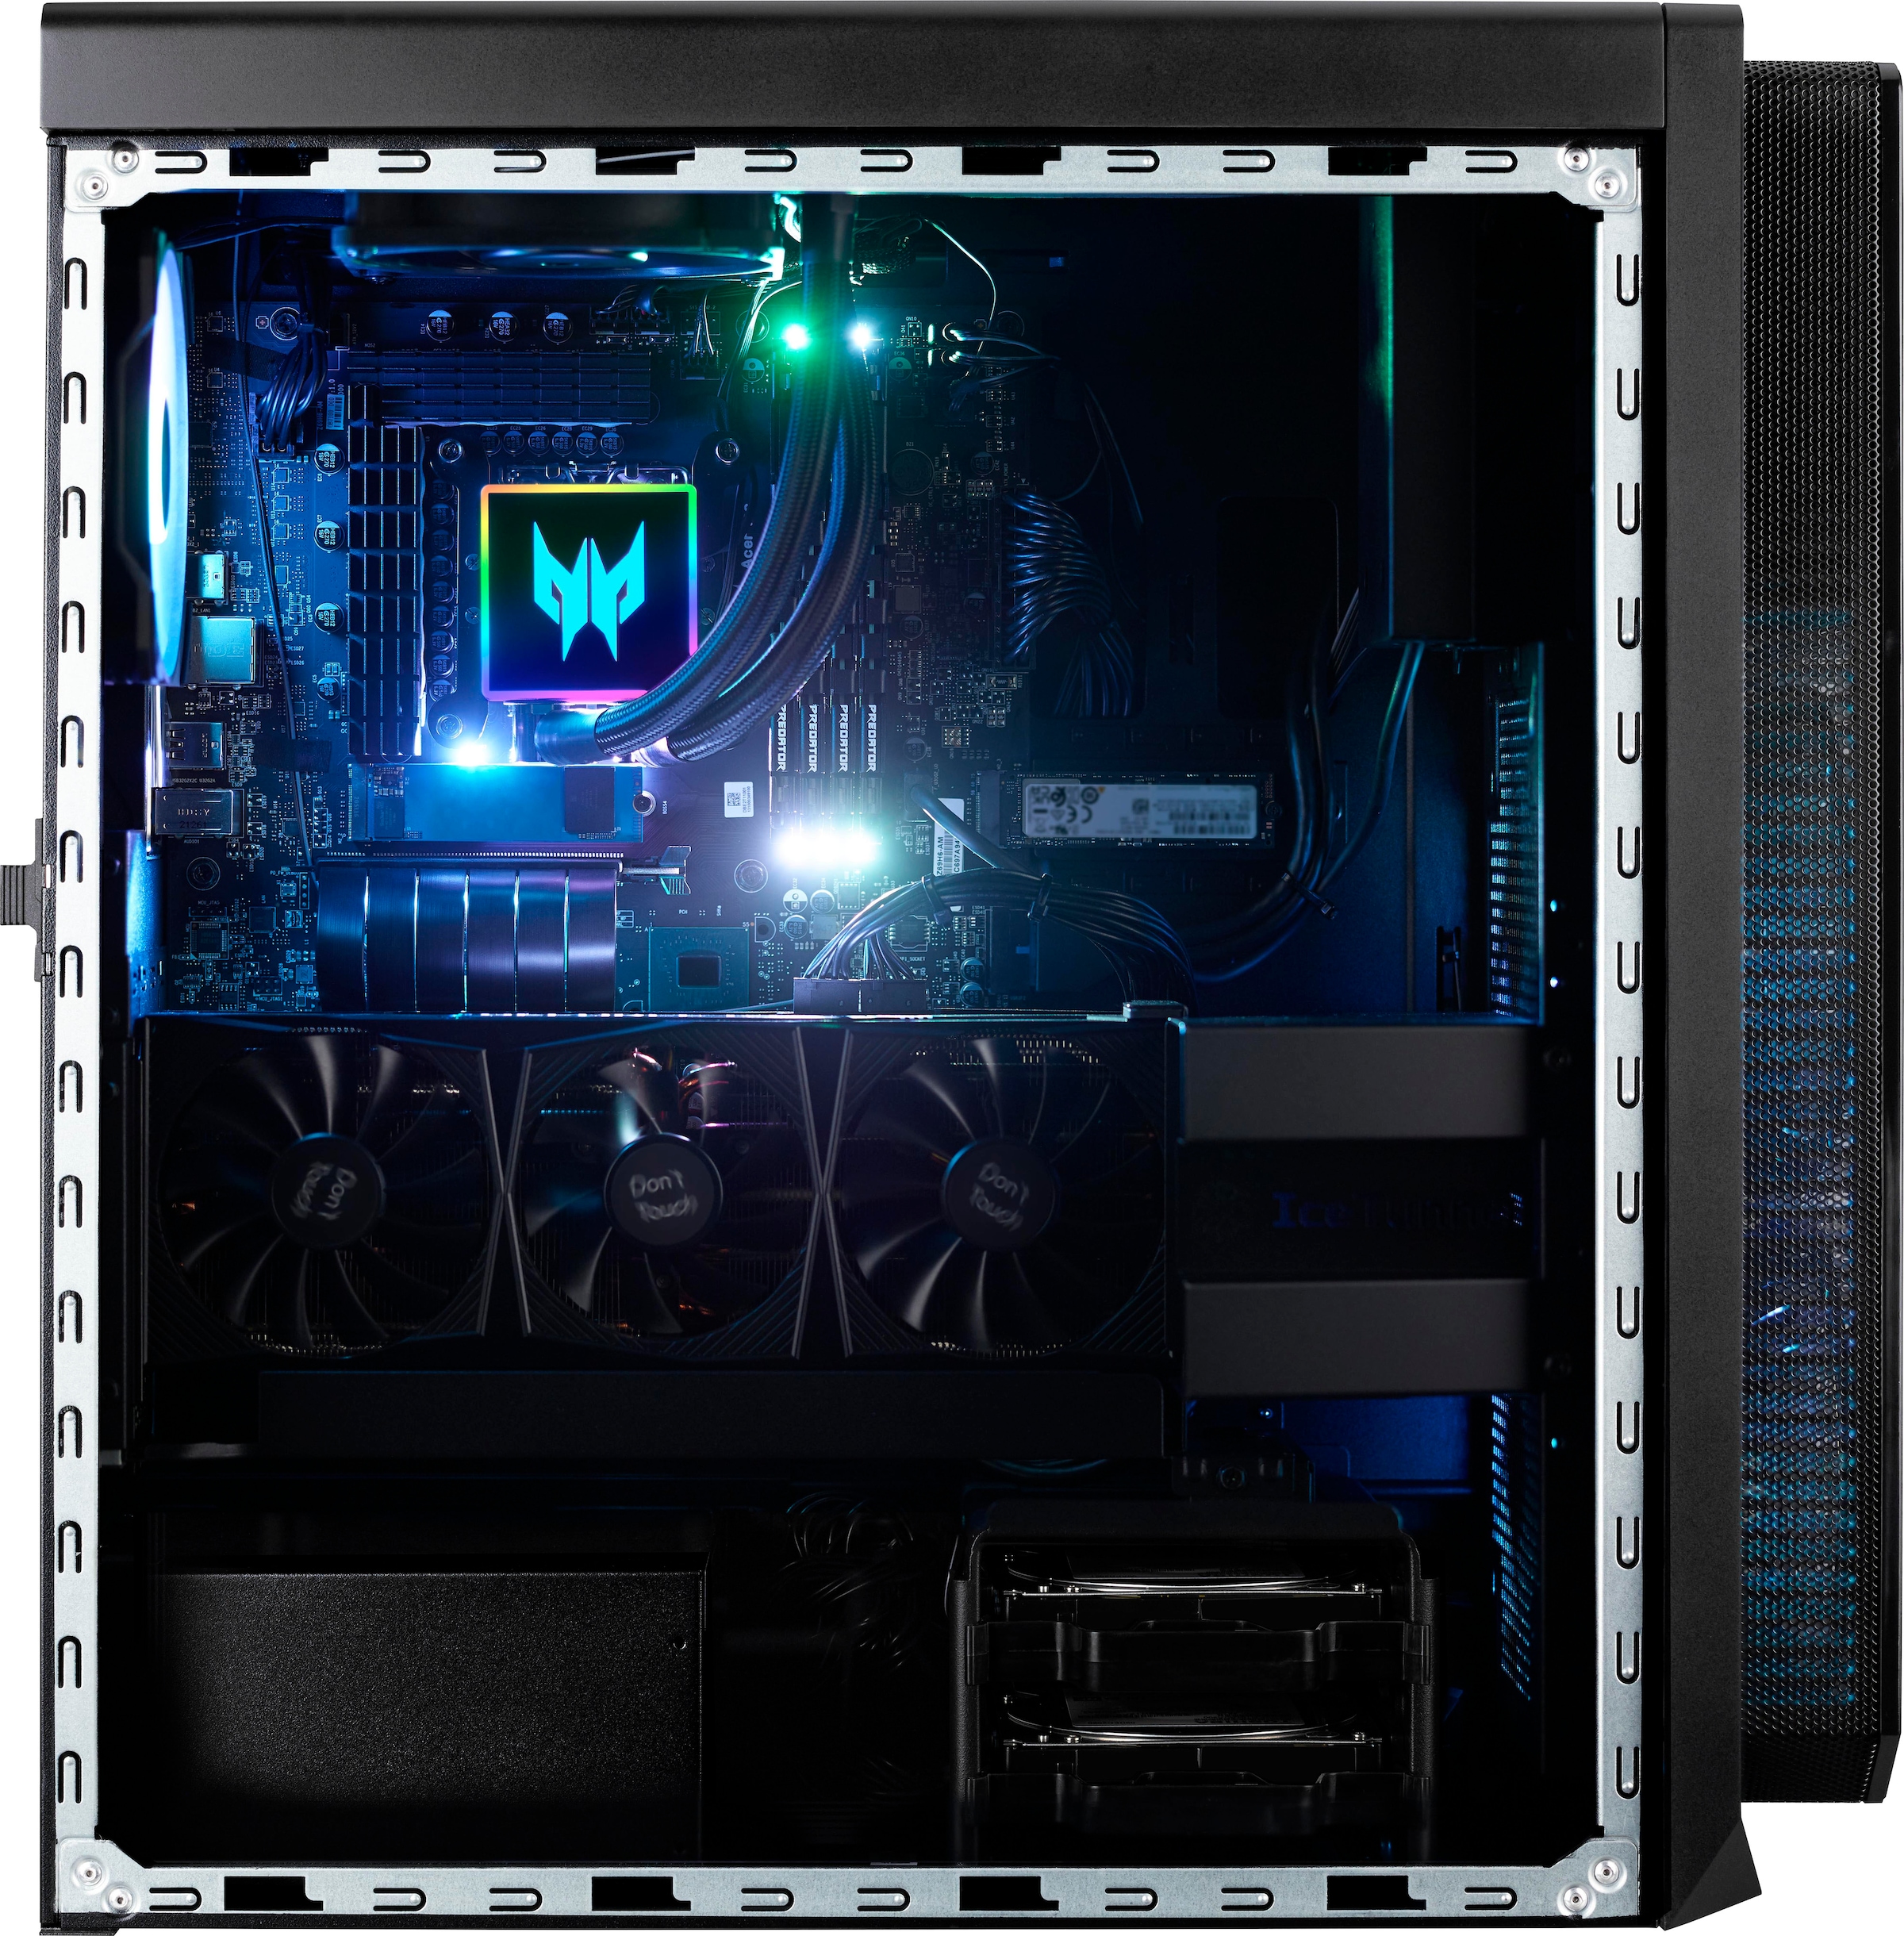 Acer Gaming-PC »Predator Orion 7000 (PO7-640)«